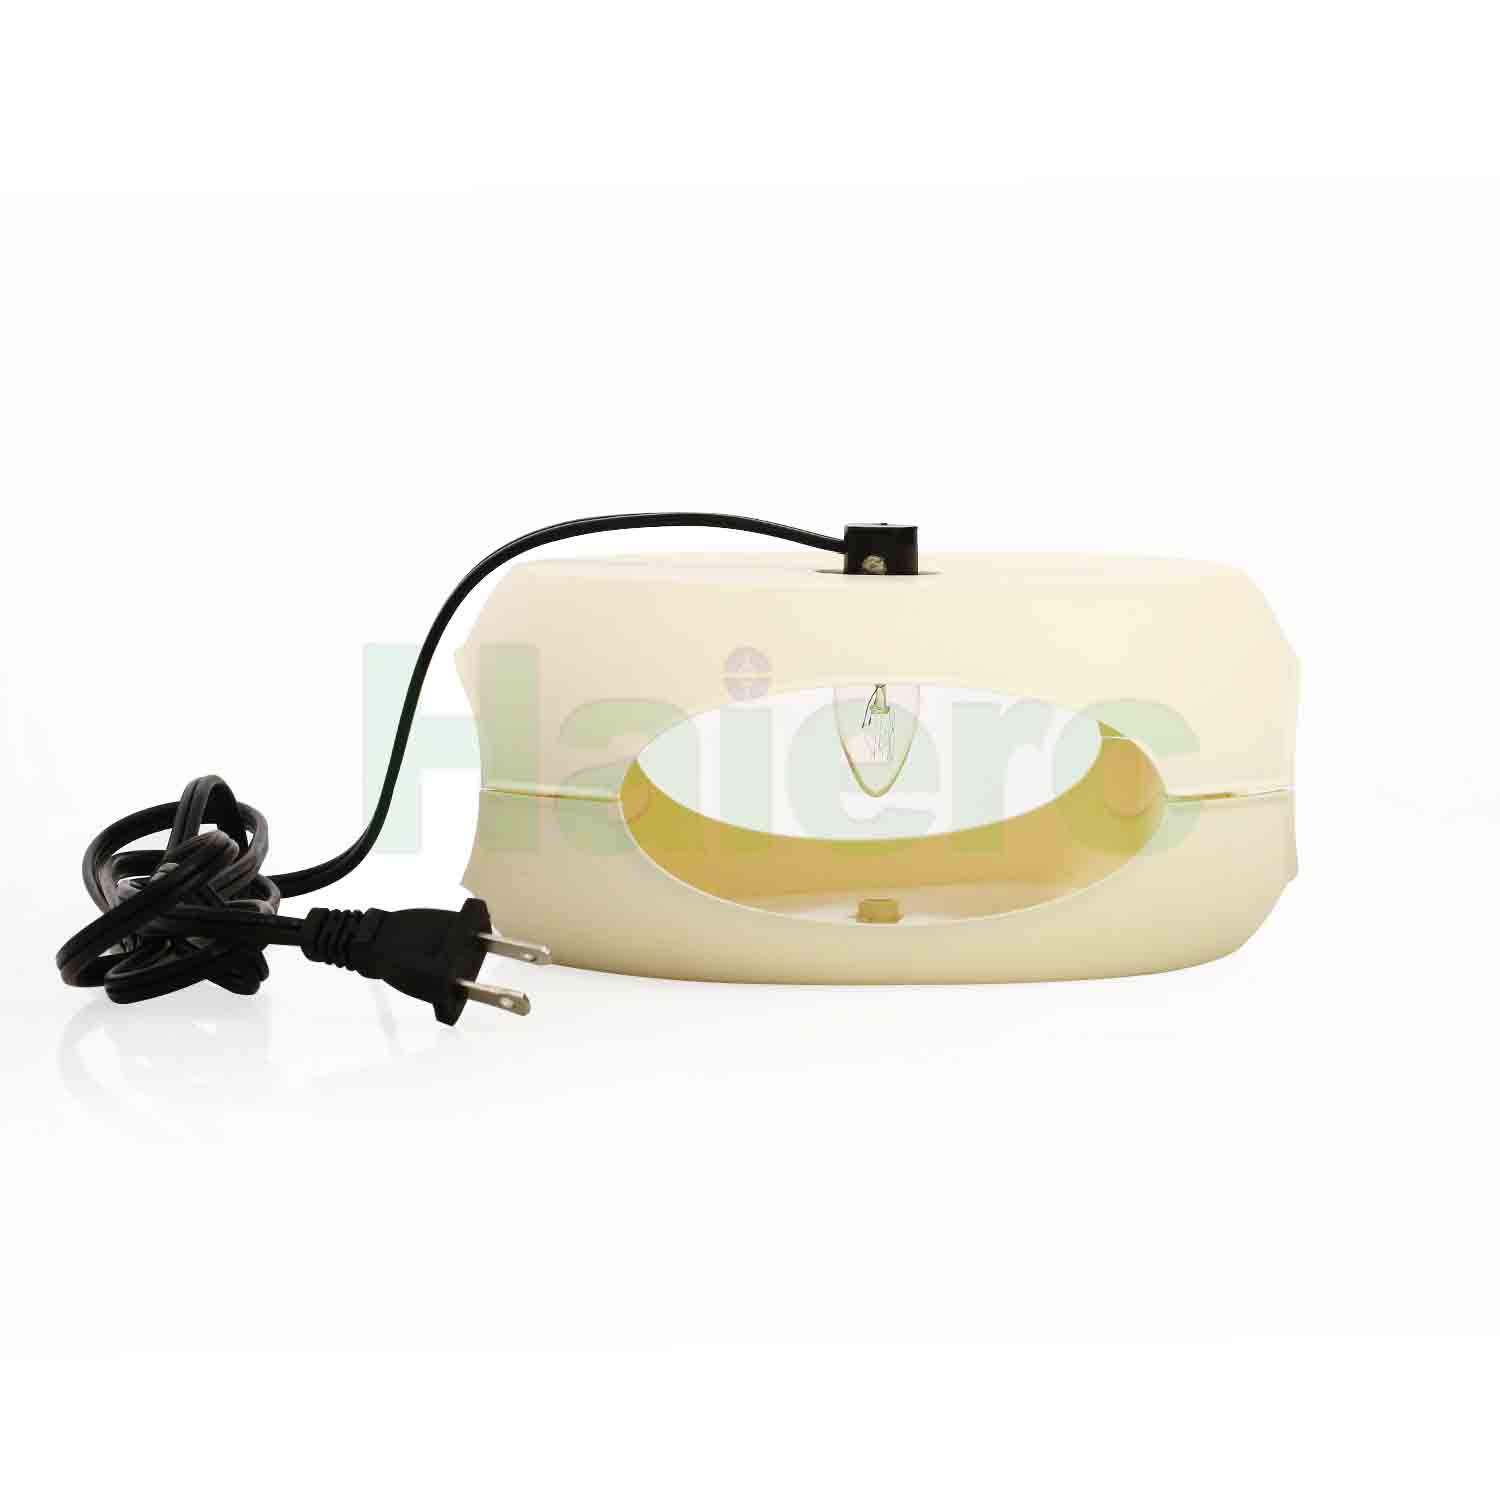 >Haierc Eco-friendy Flea Trap Lamp/Bed Bug Trap HC4614